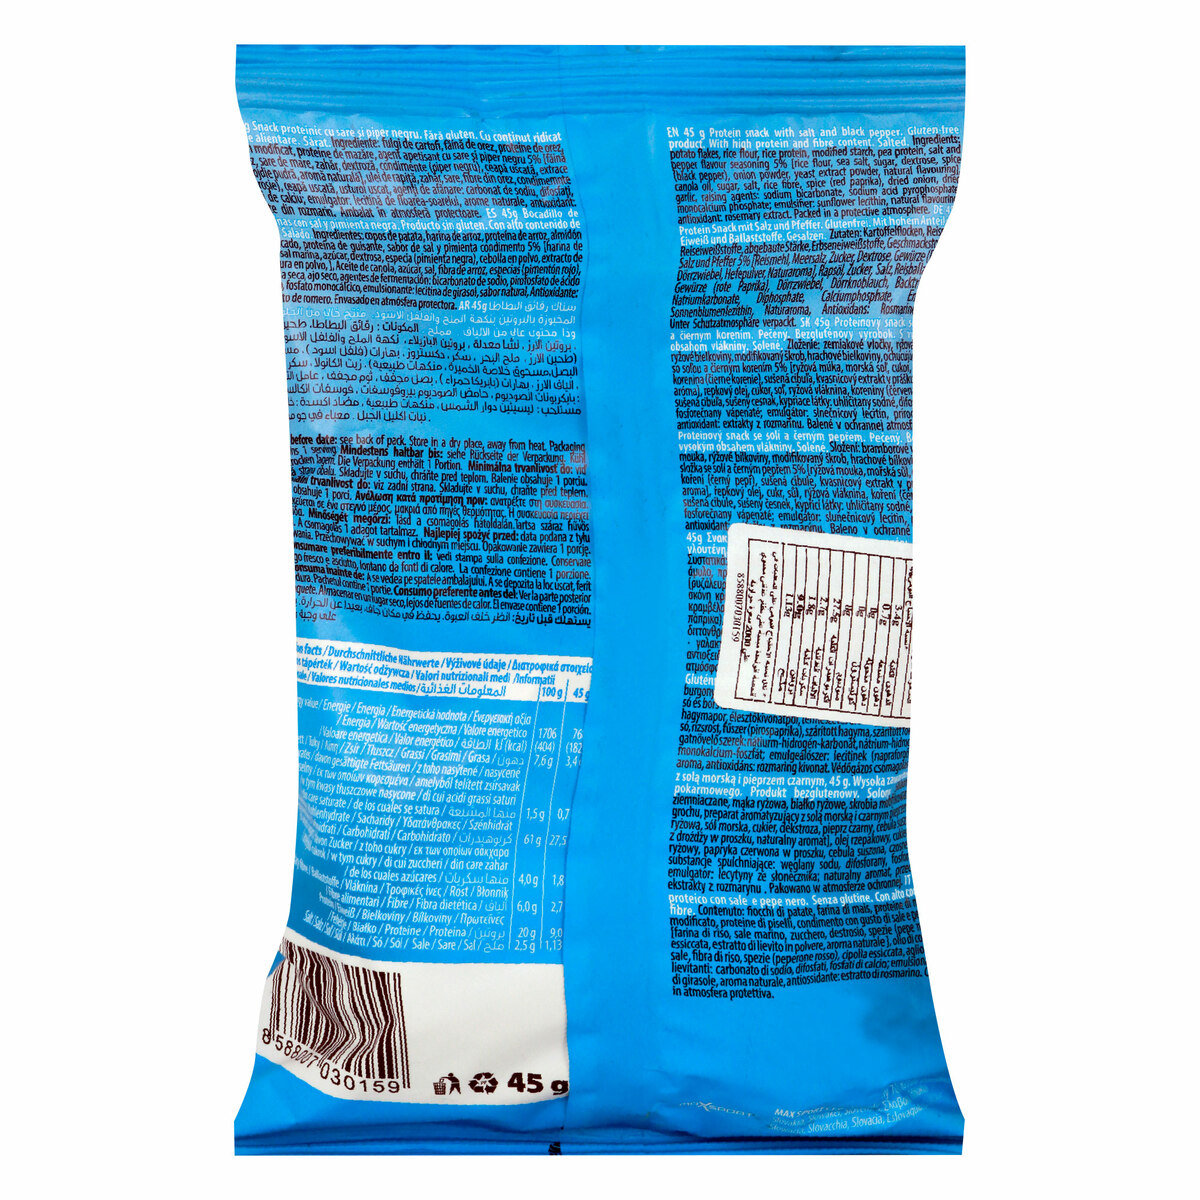 Max Sport Protein Chips Sea Salt & Pepper 45 g